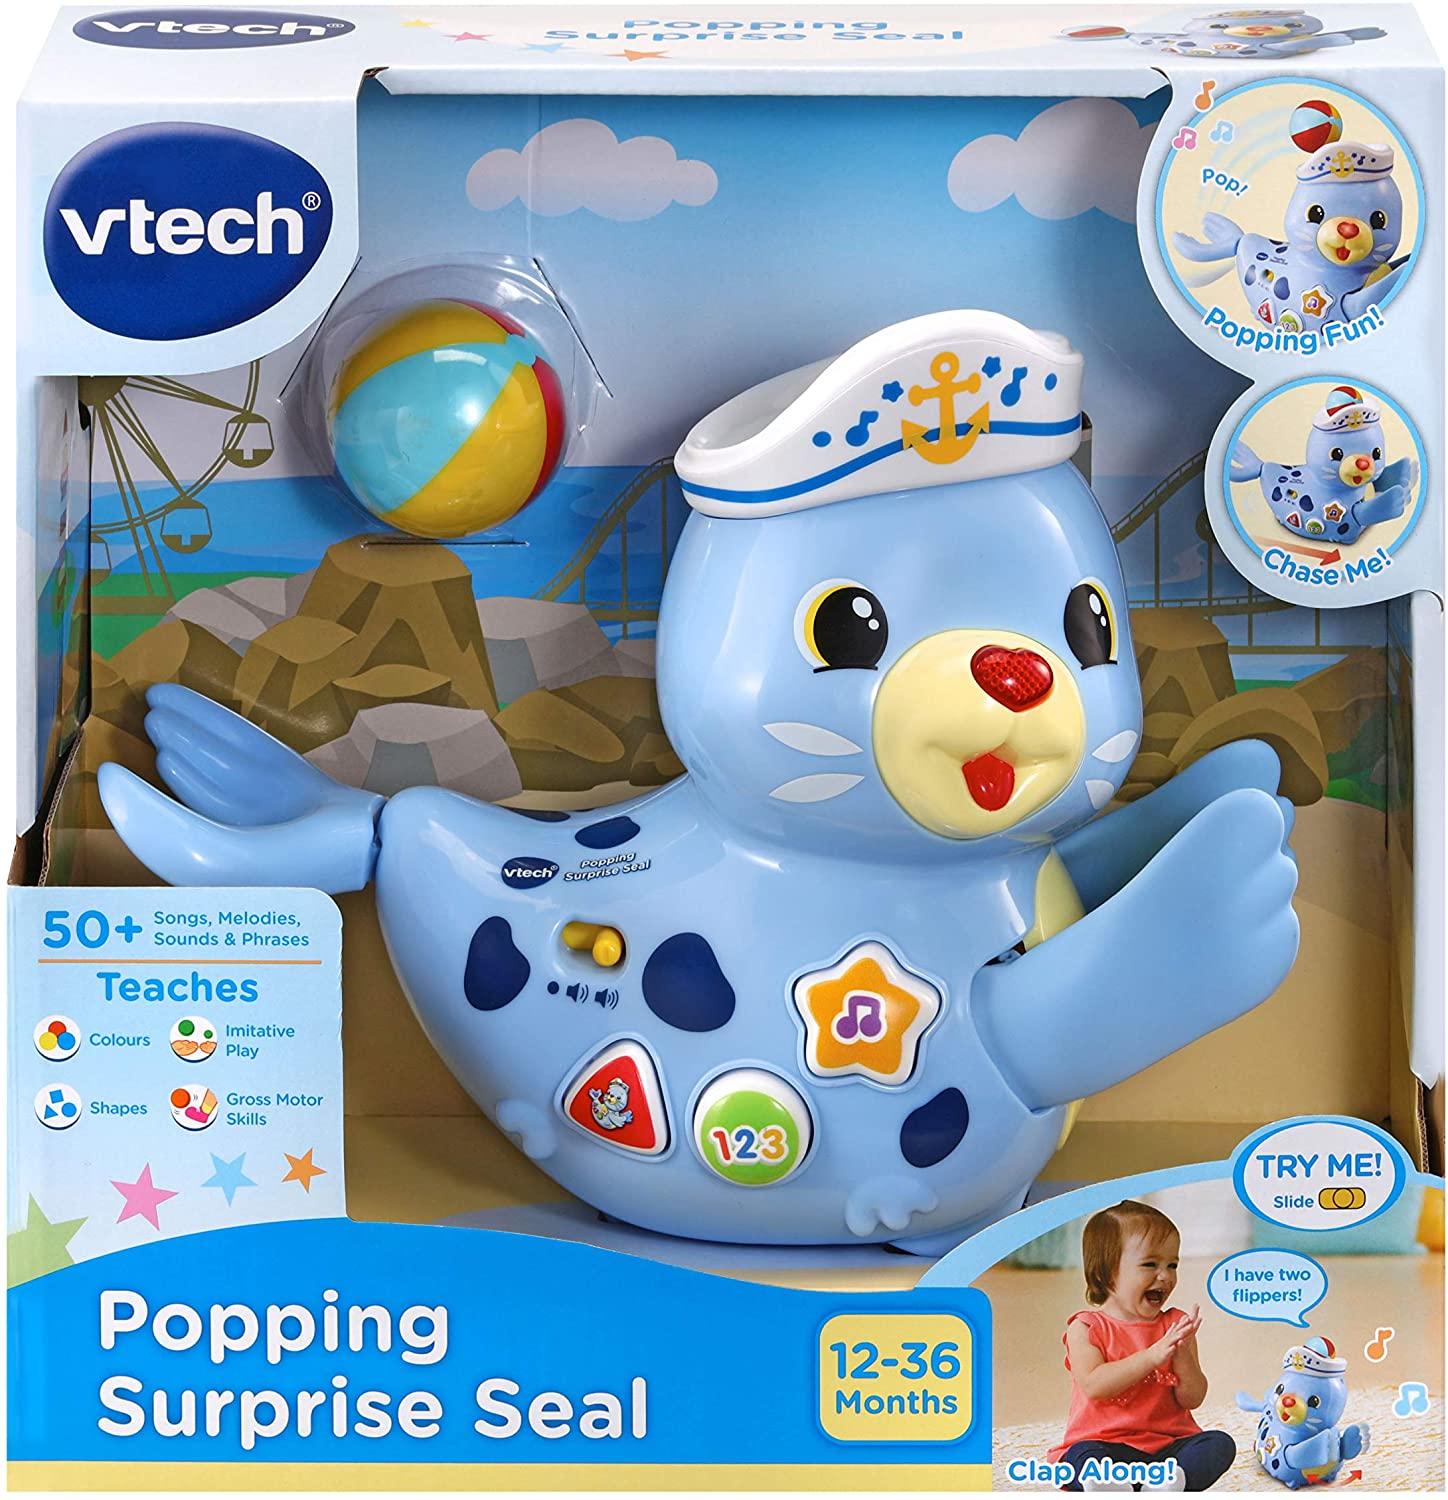 Vtech Popping Surprise Seal Toymaster Ballina